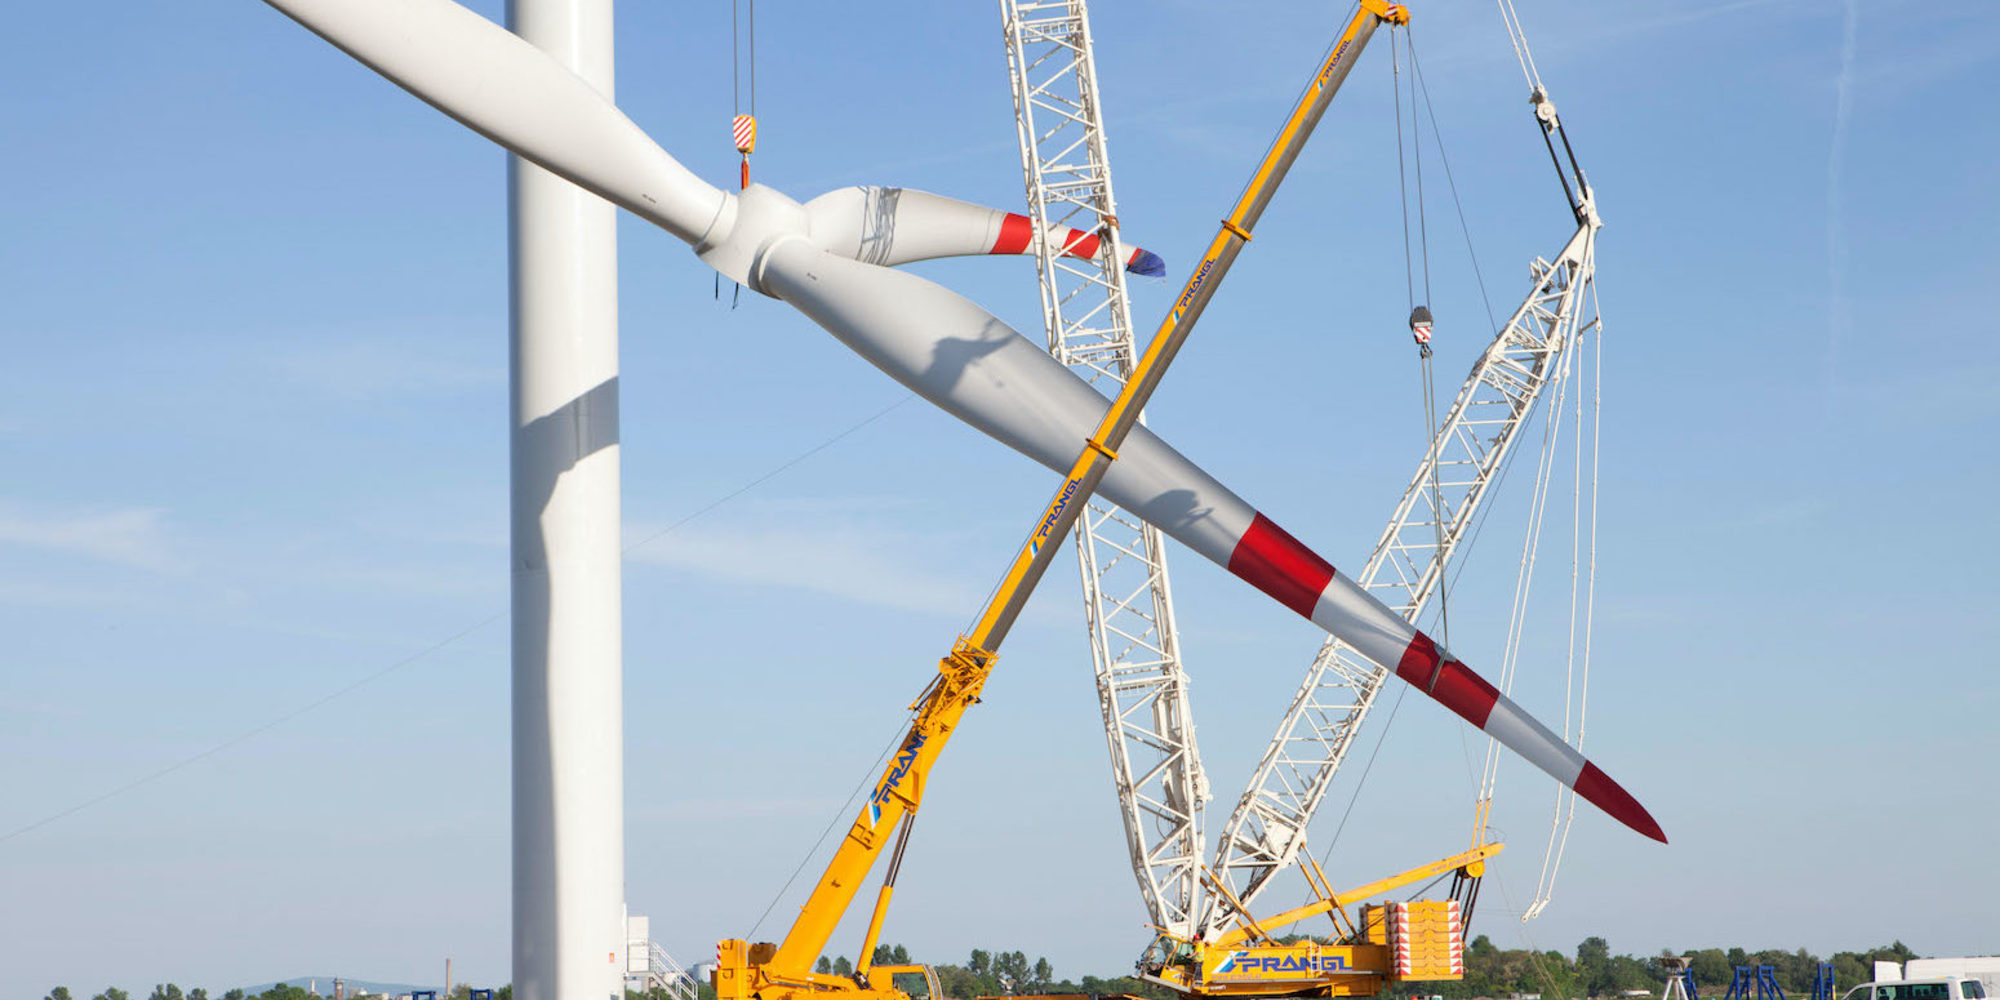 Construction Of A Wind Turbine In Austria Cxt79 C 1550x804